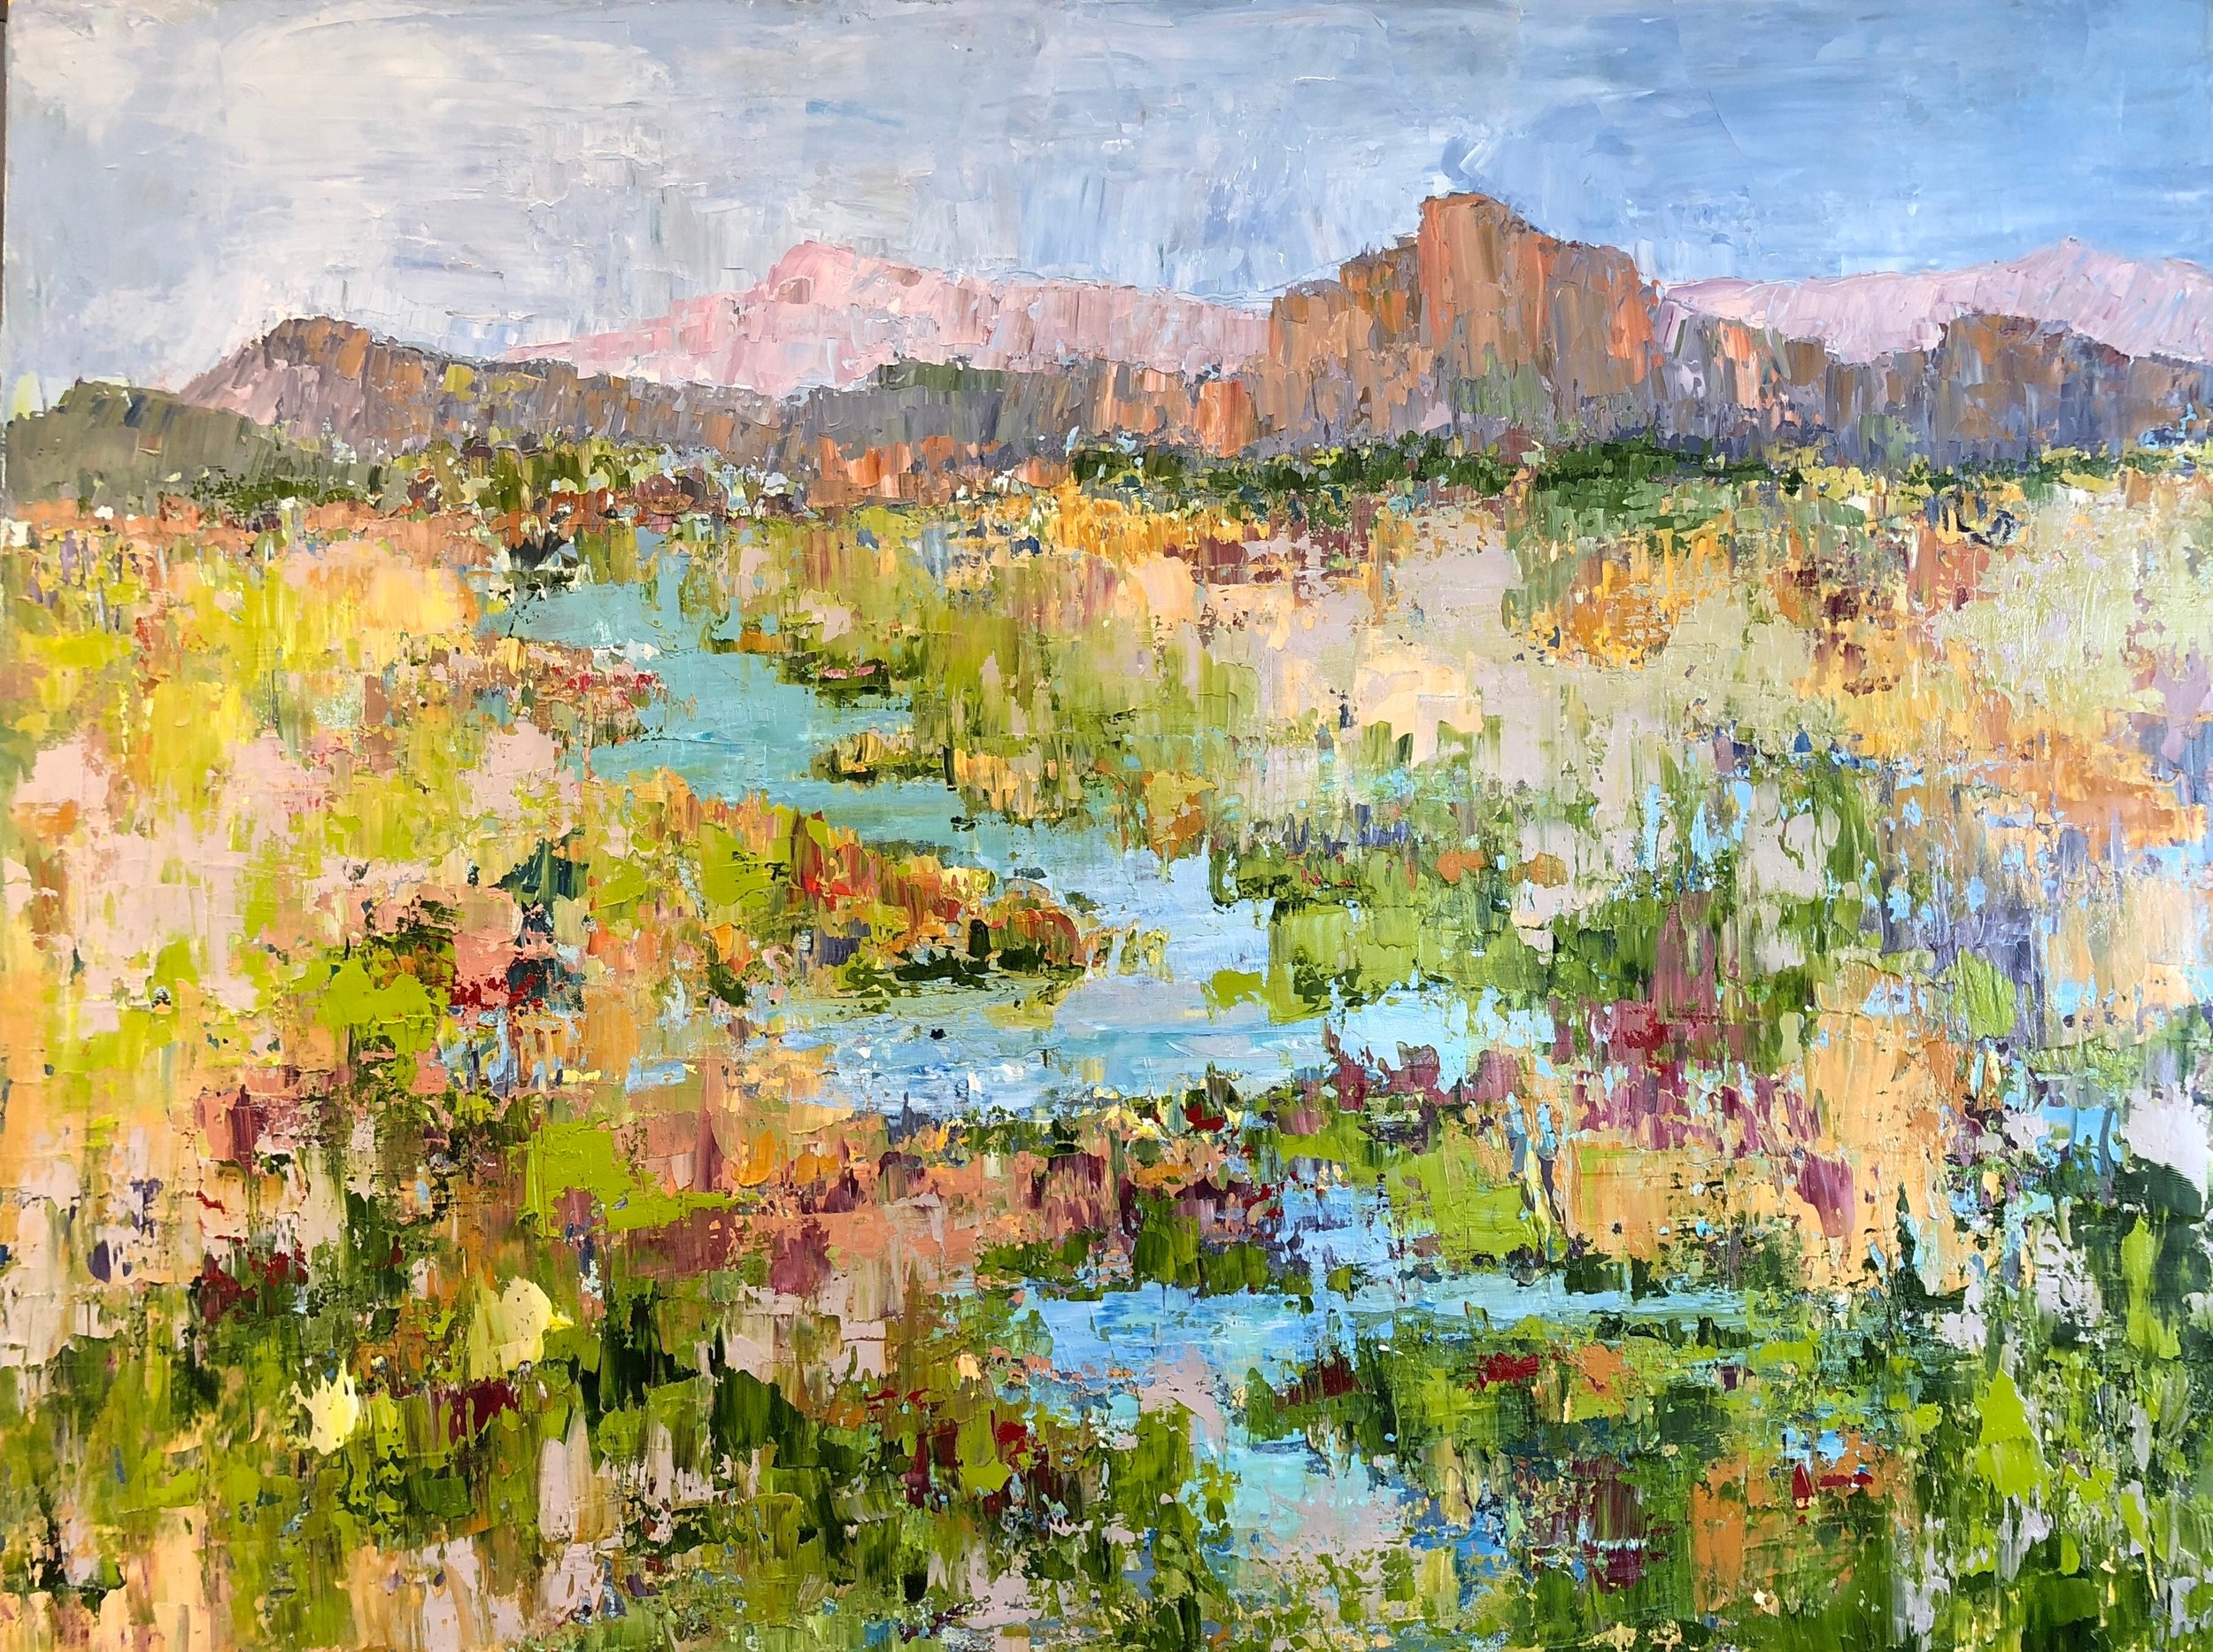 Desert Magic, oil on canvas, 36"x48" SOLD